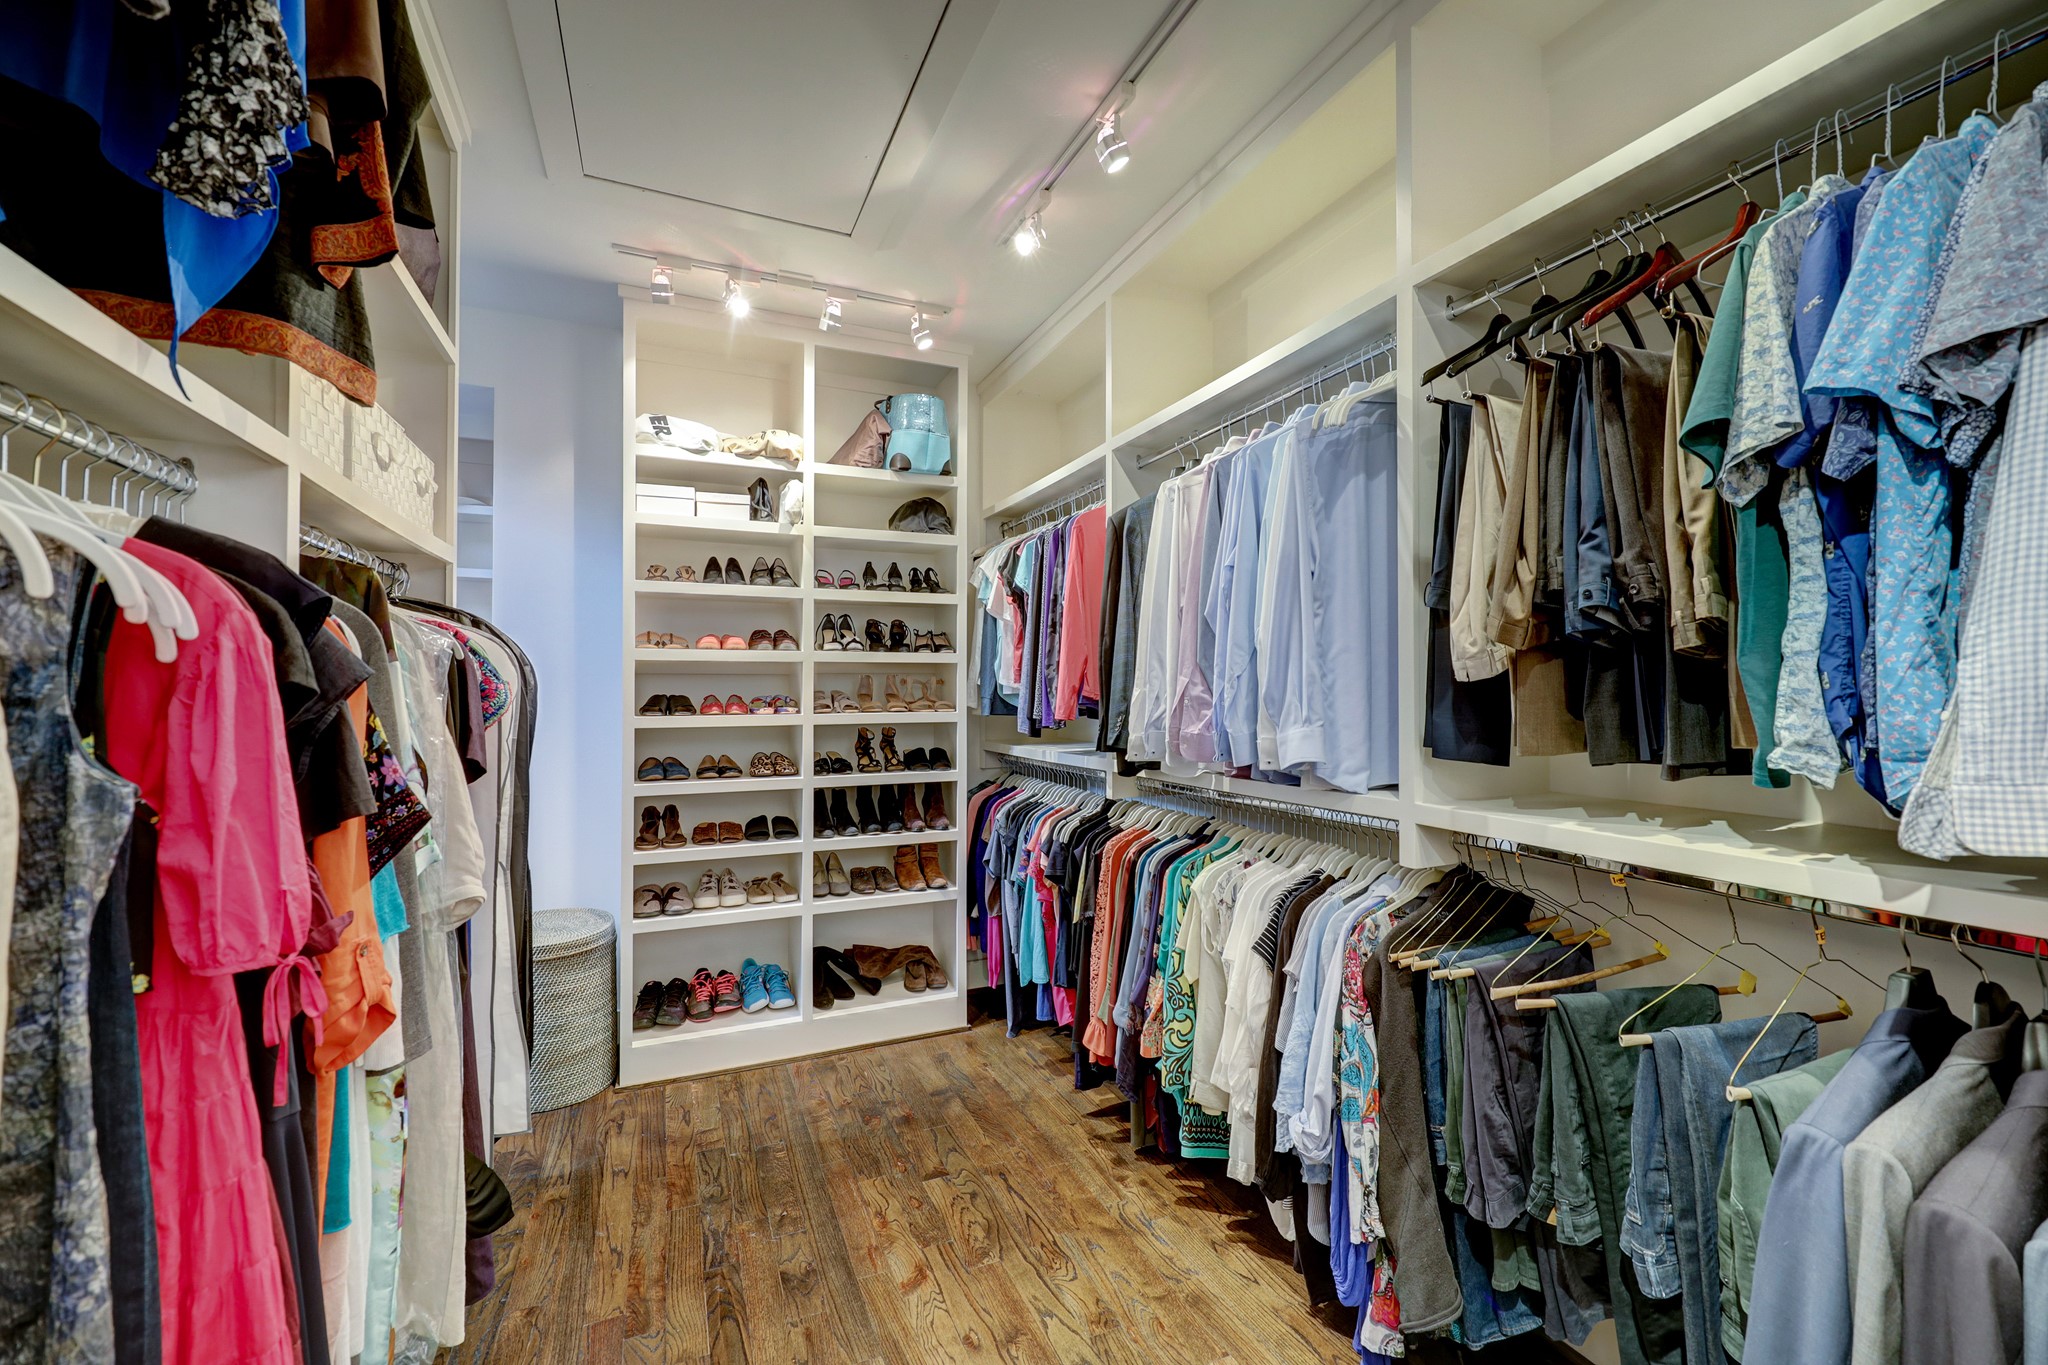 Generous Owners' closet